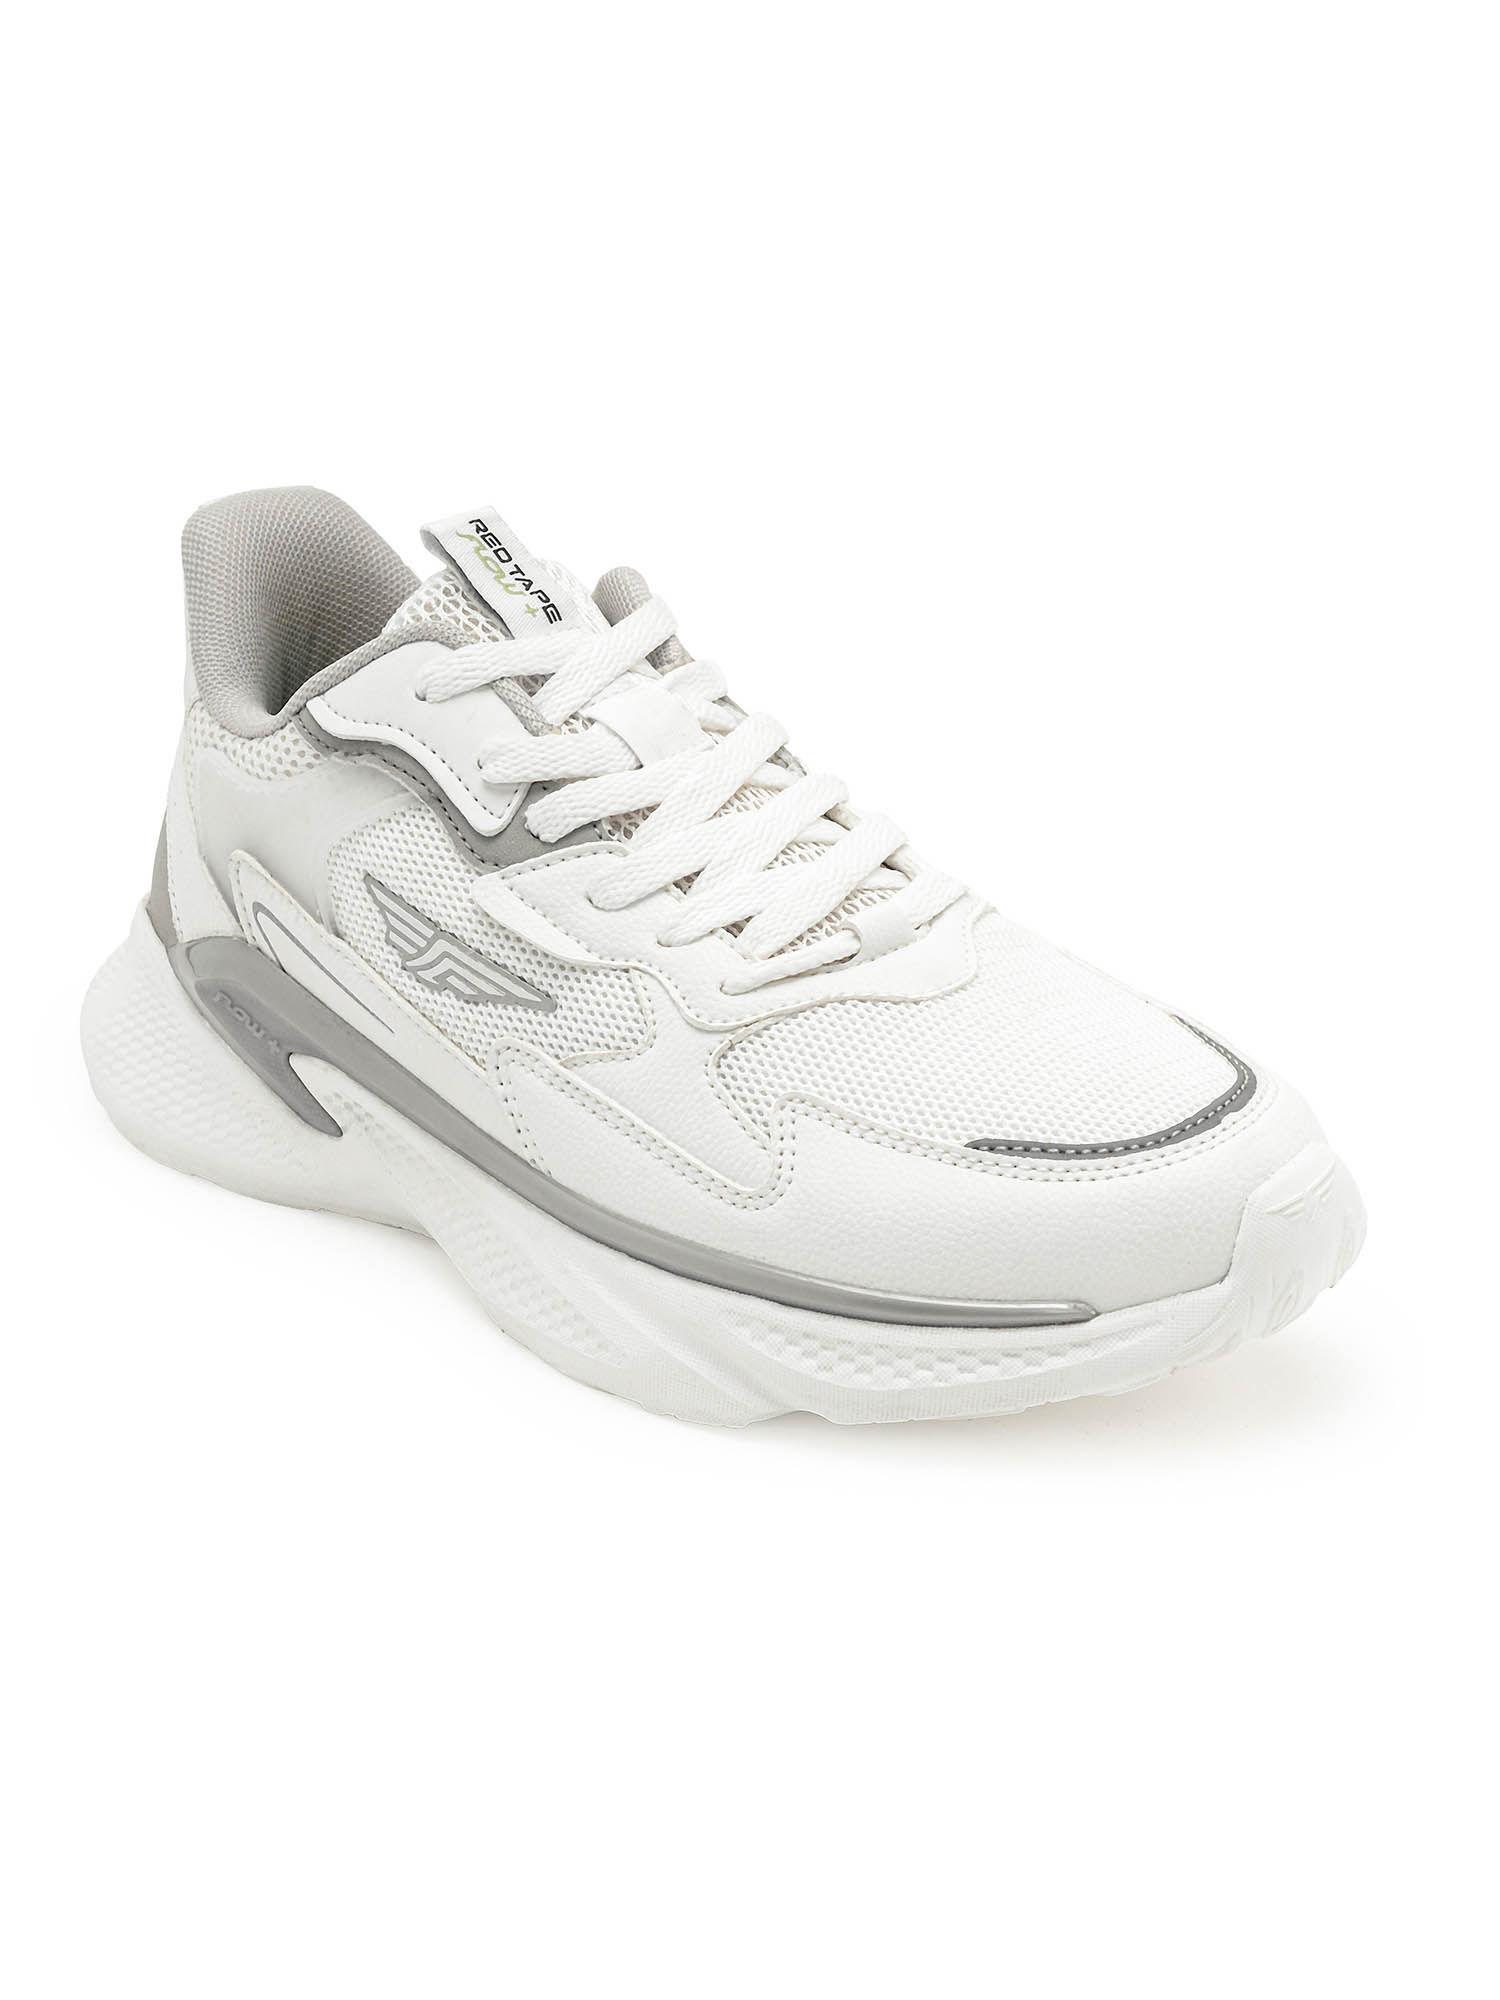 mens-textured-white-grey-walking-shoes